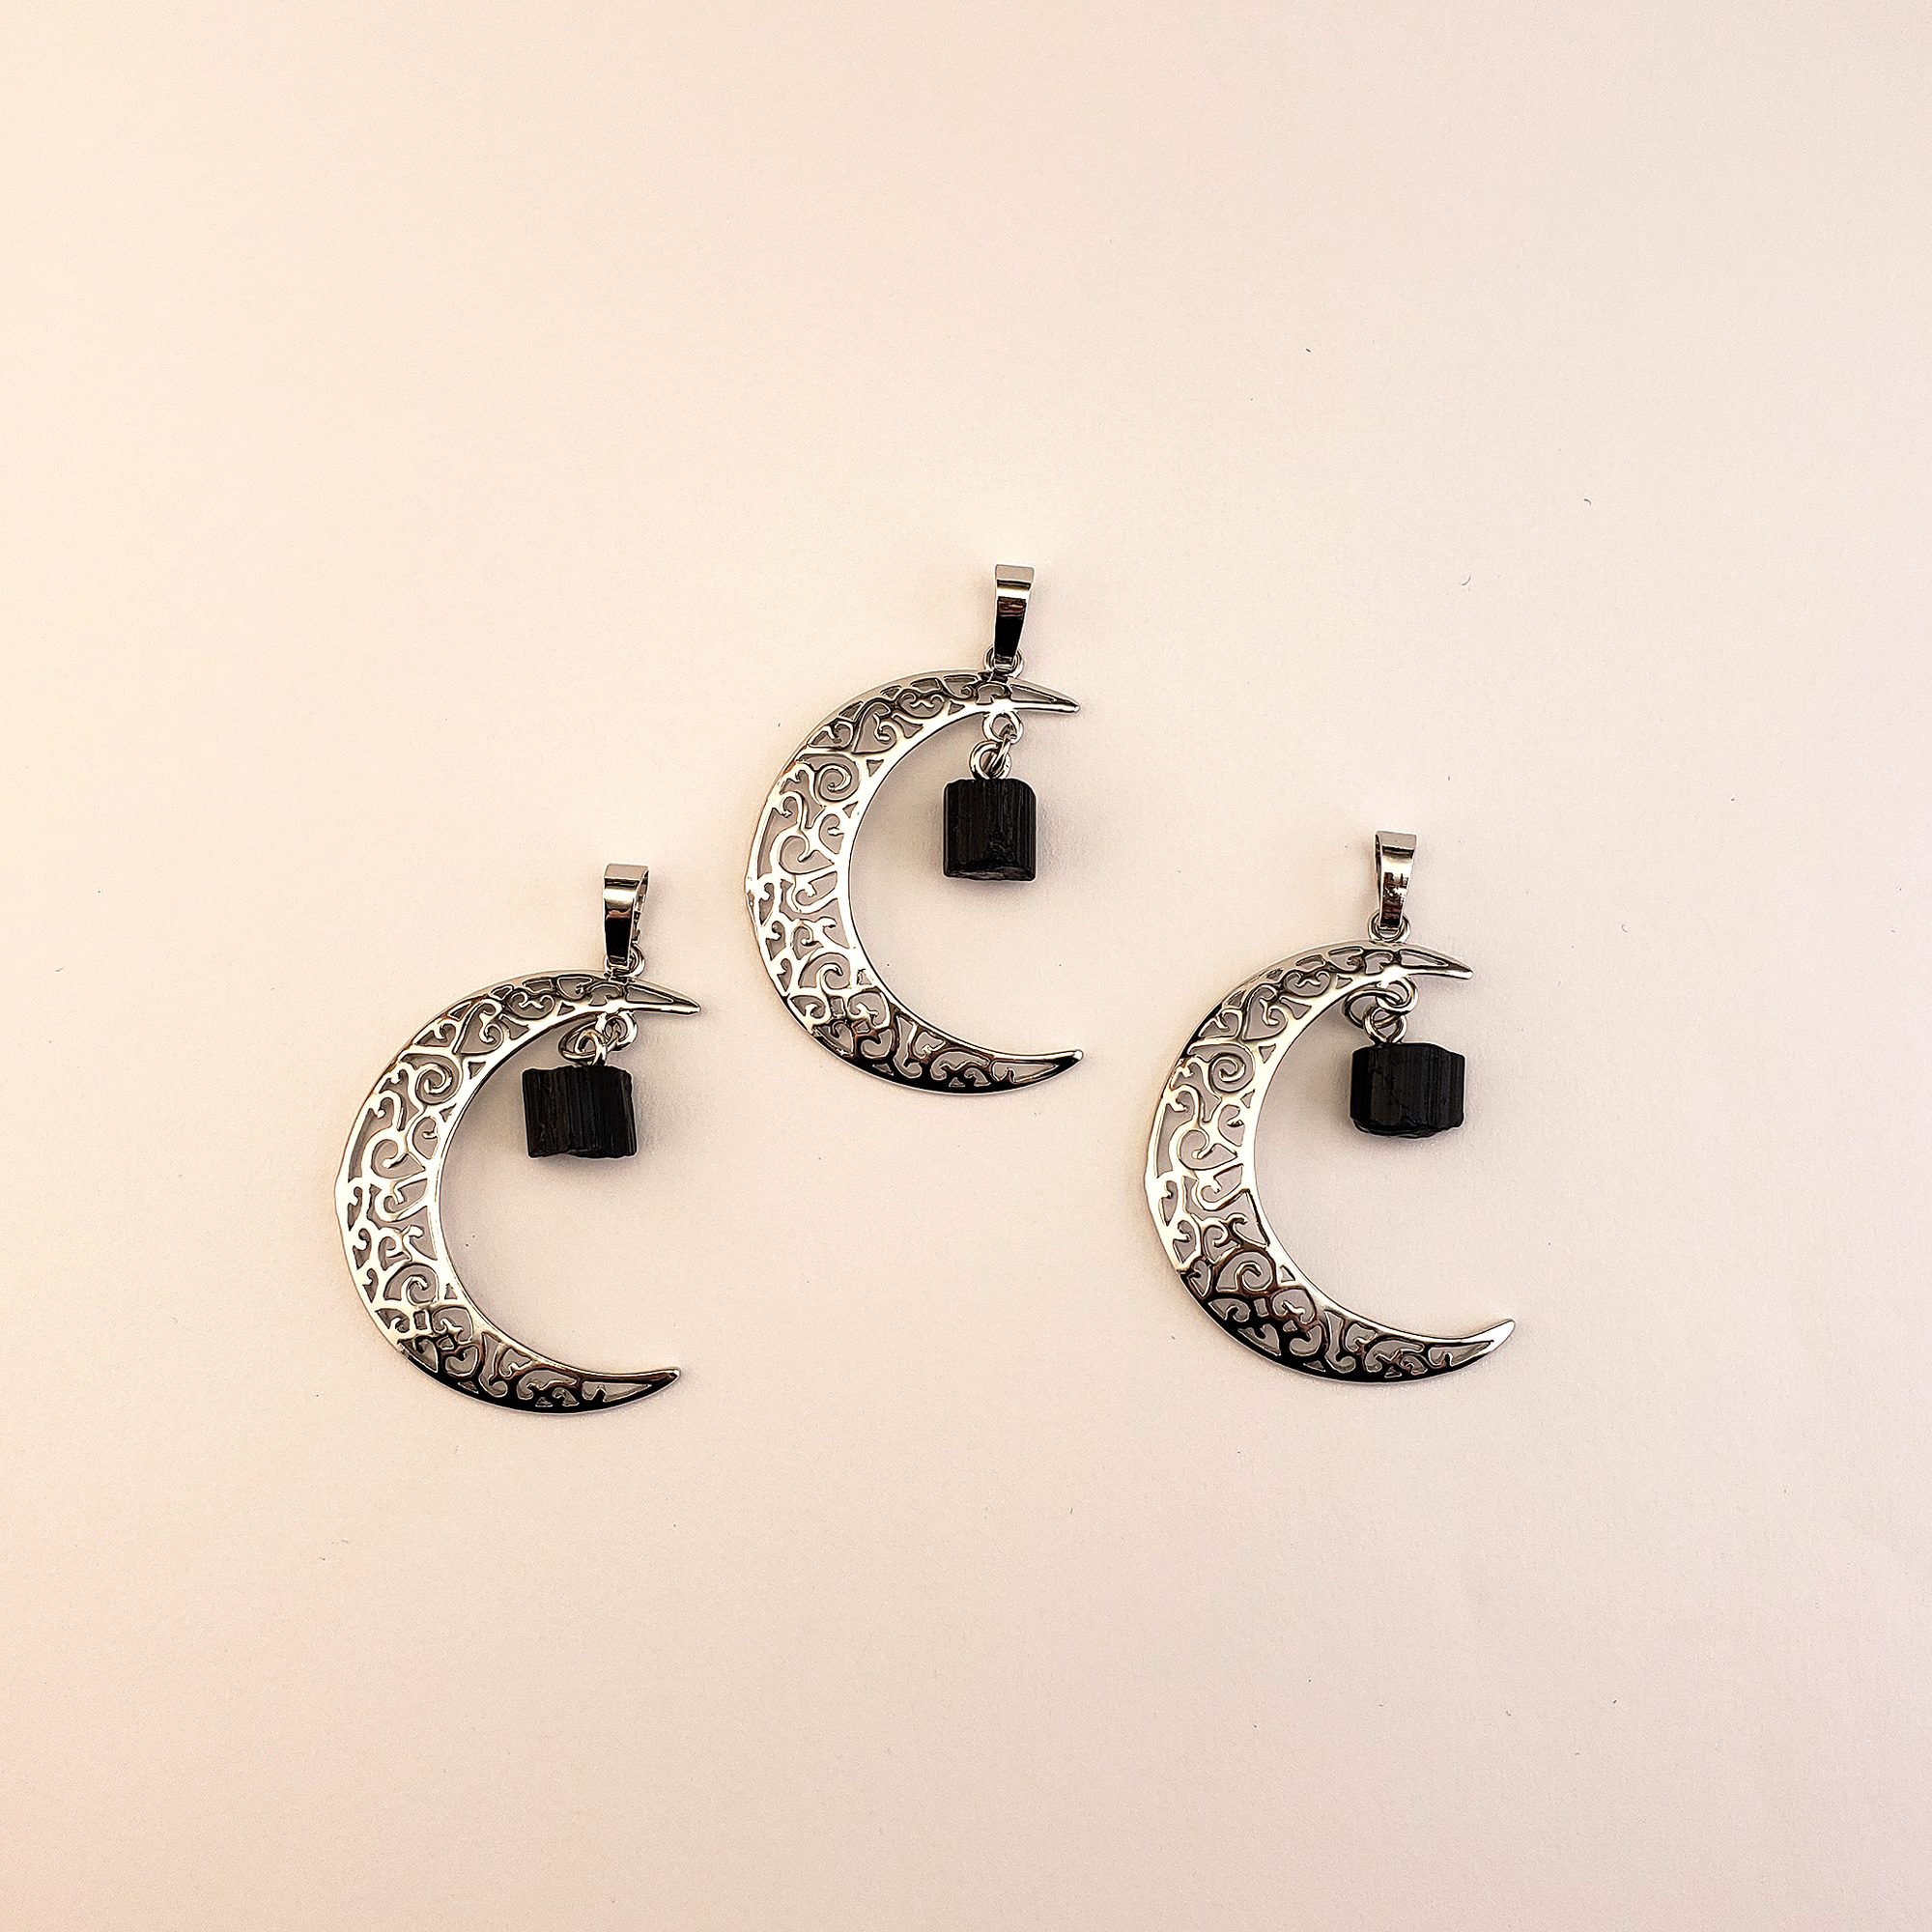 Black Tourmaline Crescent Moon Gemstone Pendant Necklace - On White Background